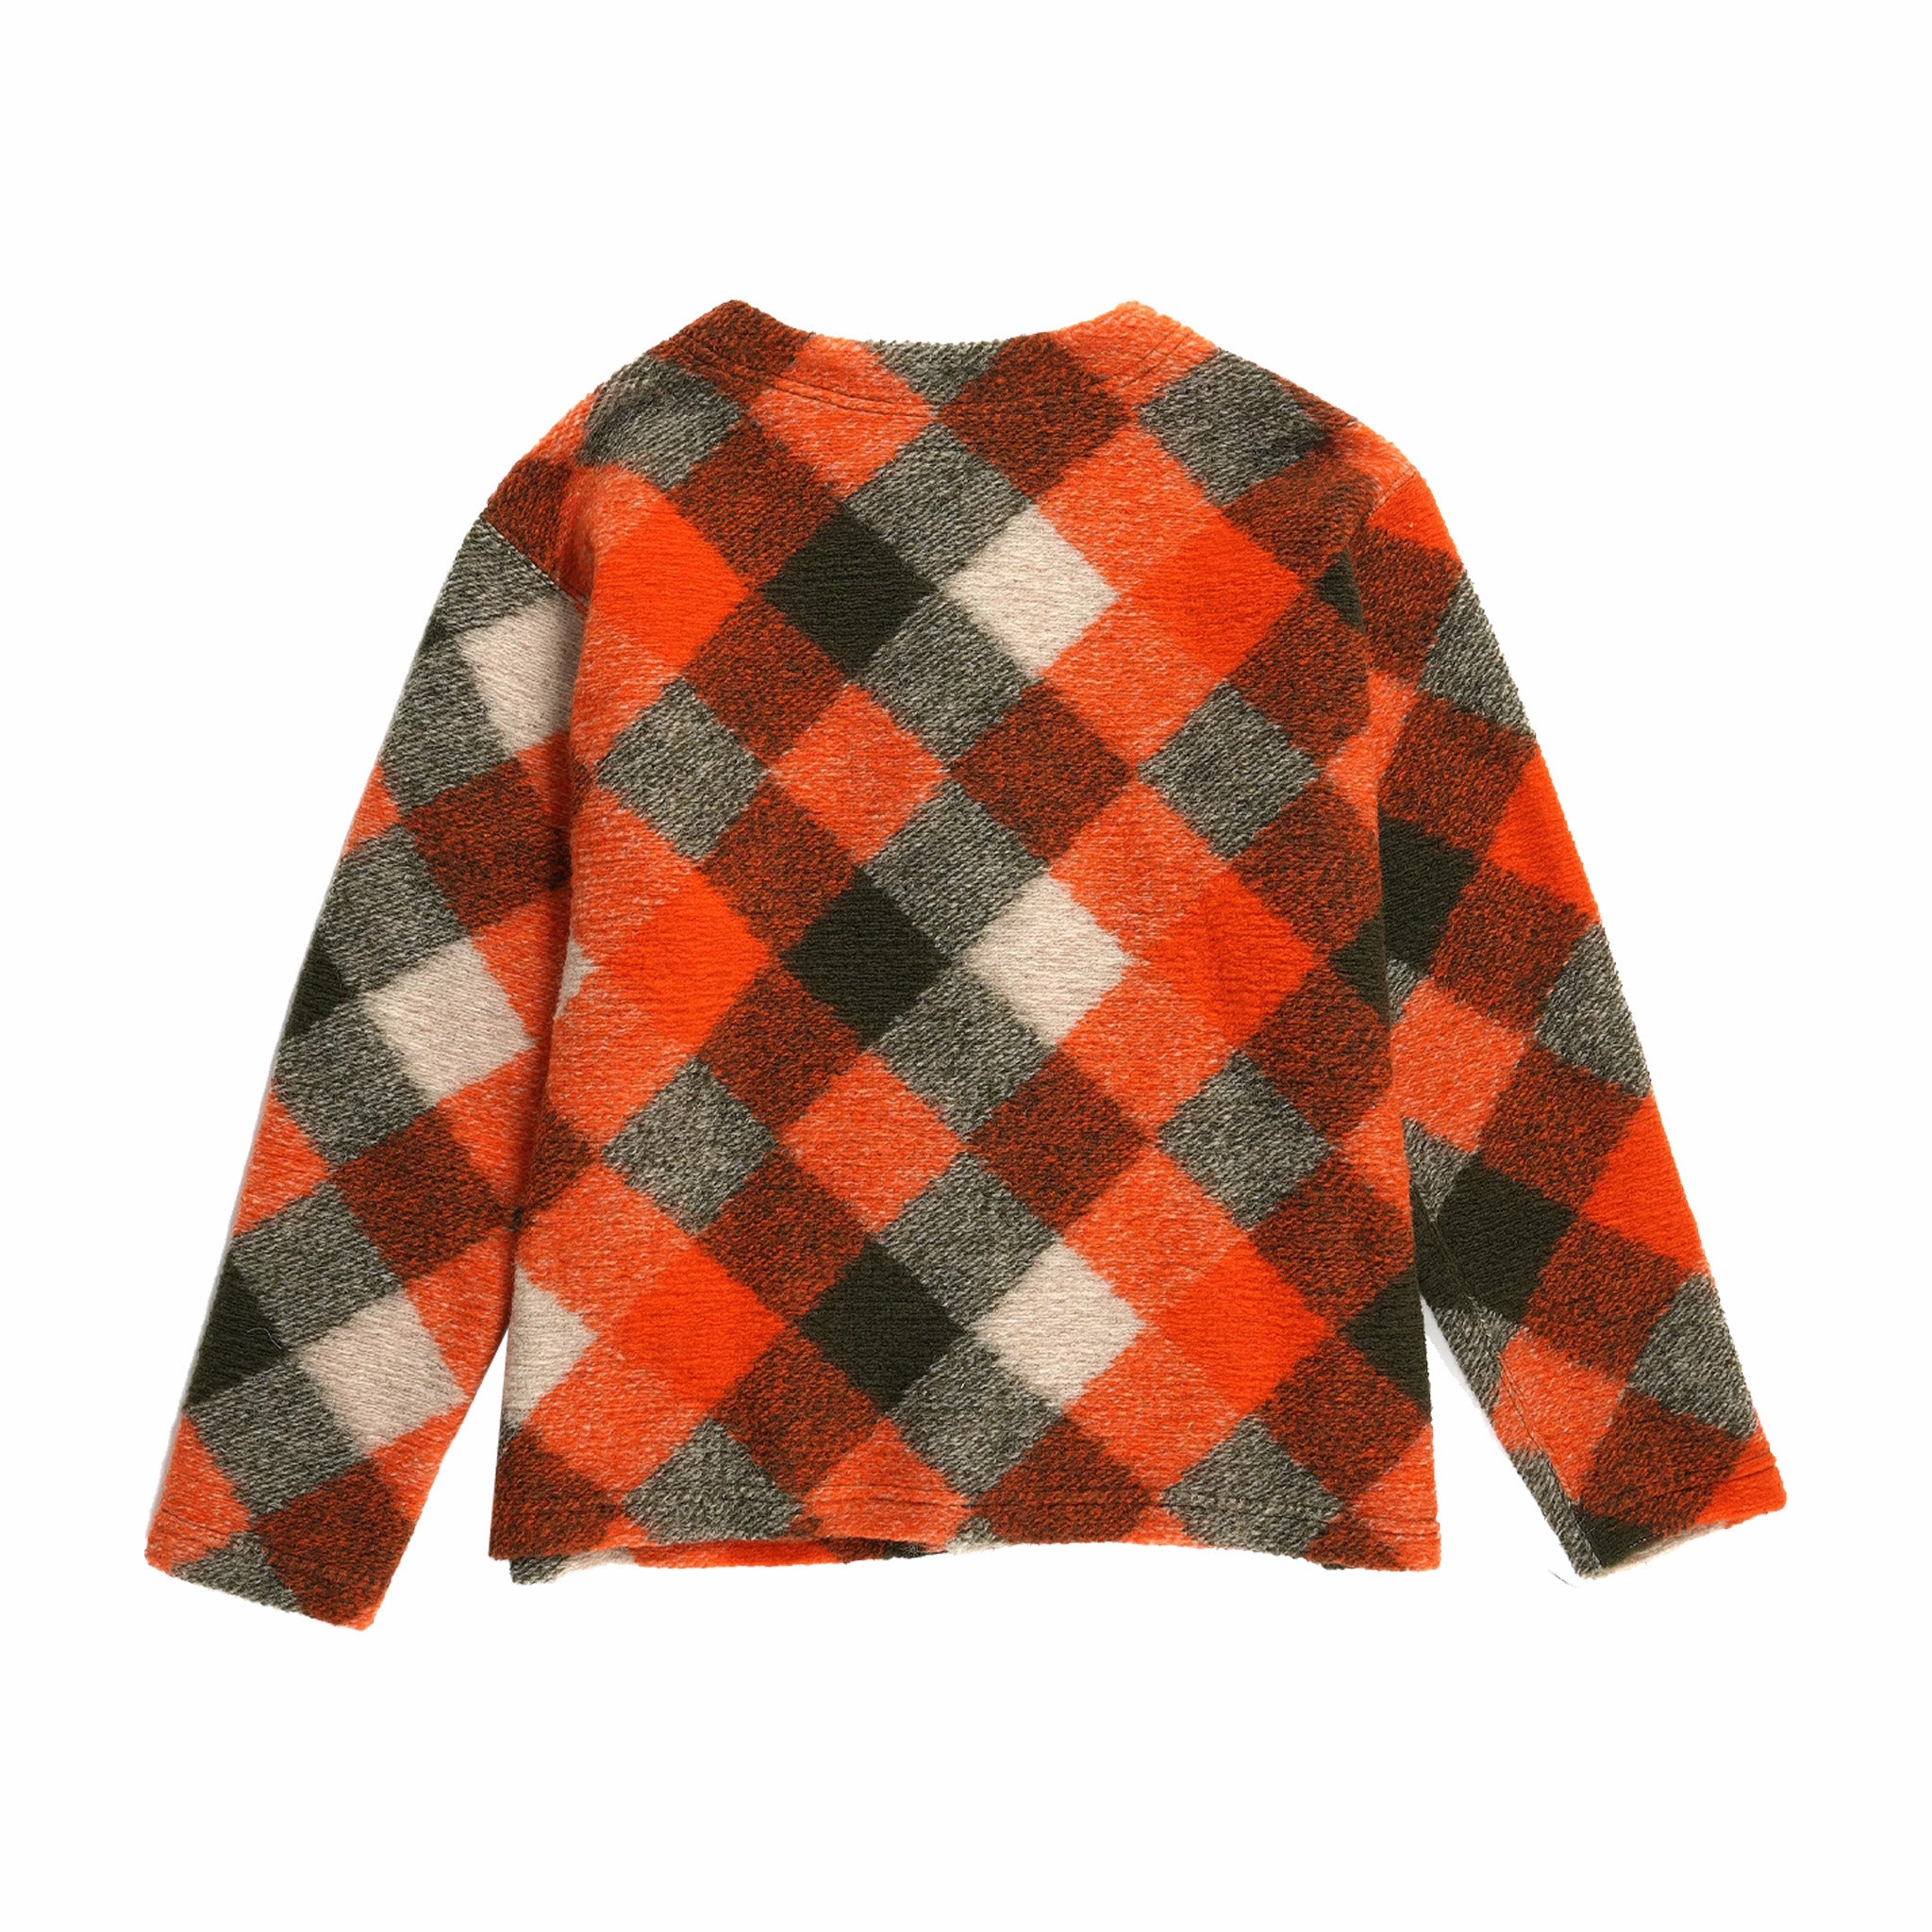 Indumenti ingegnerizzati, Engineered Garments - Cardigan in maglia di diamante in lana poly (arancione)